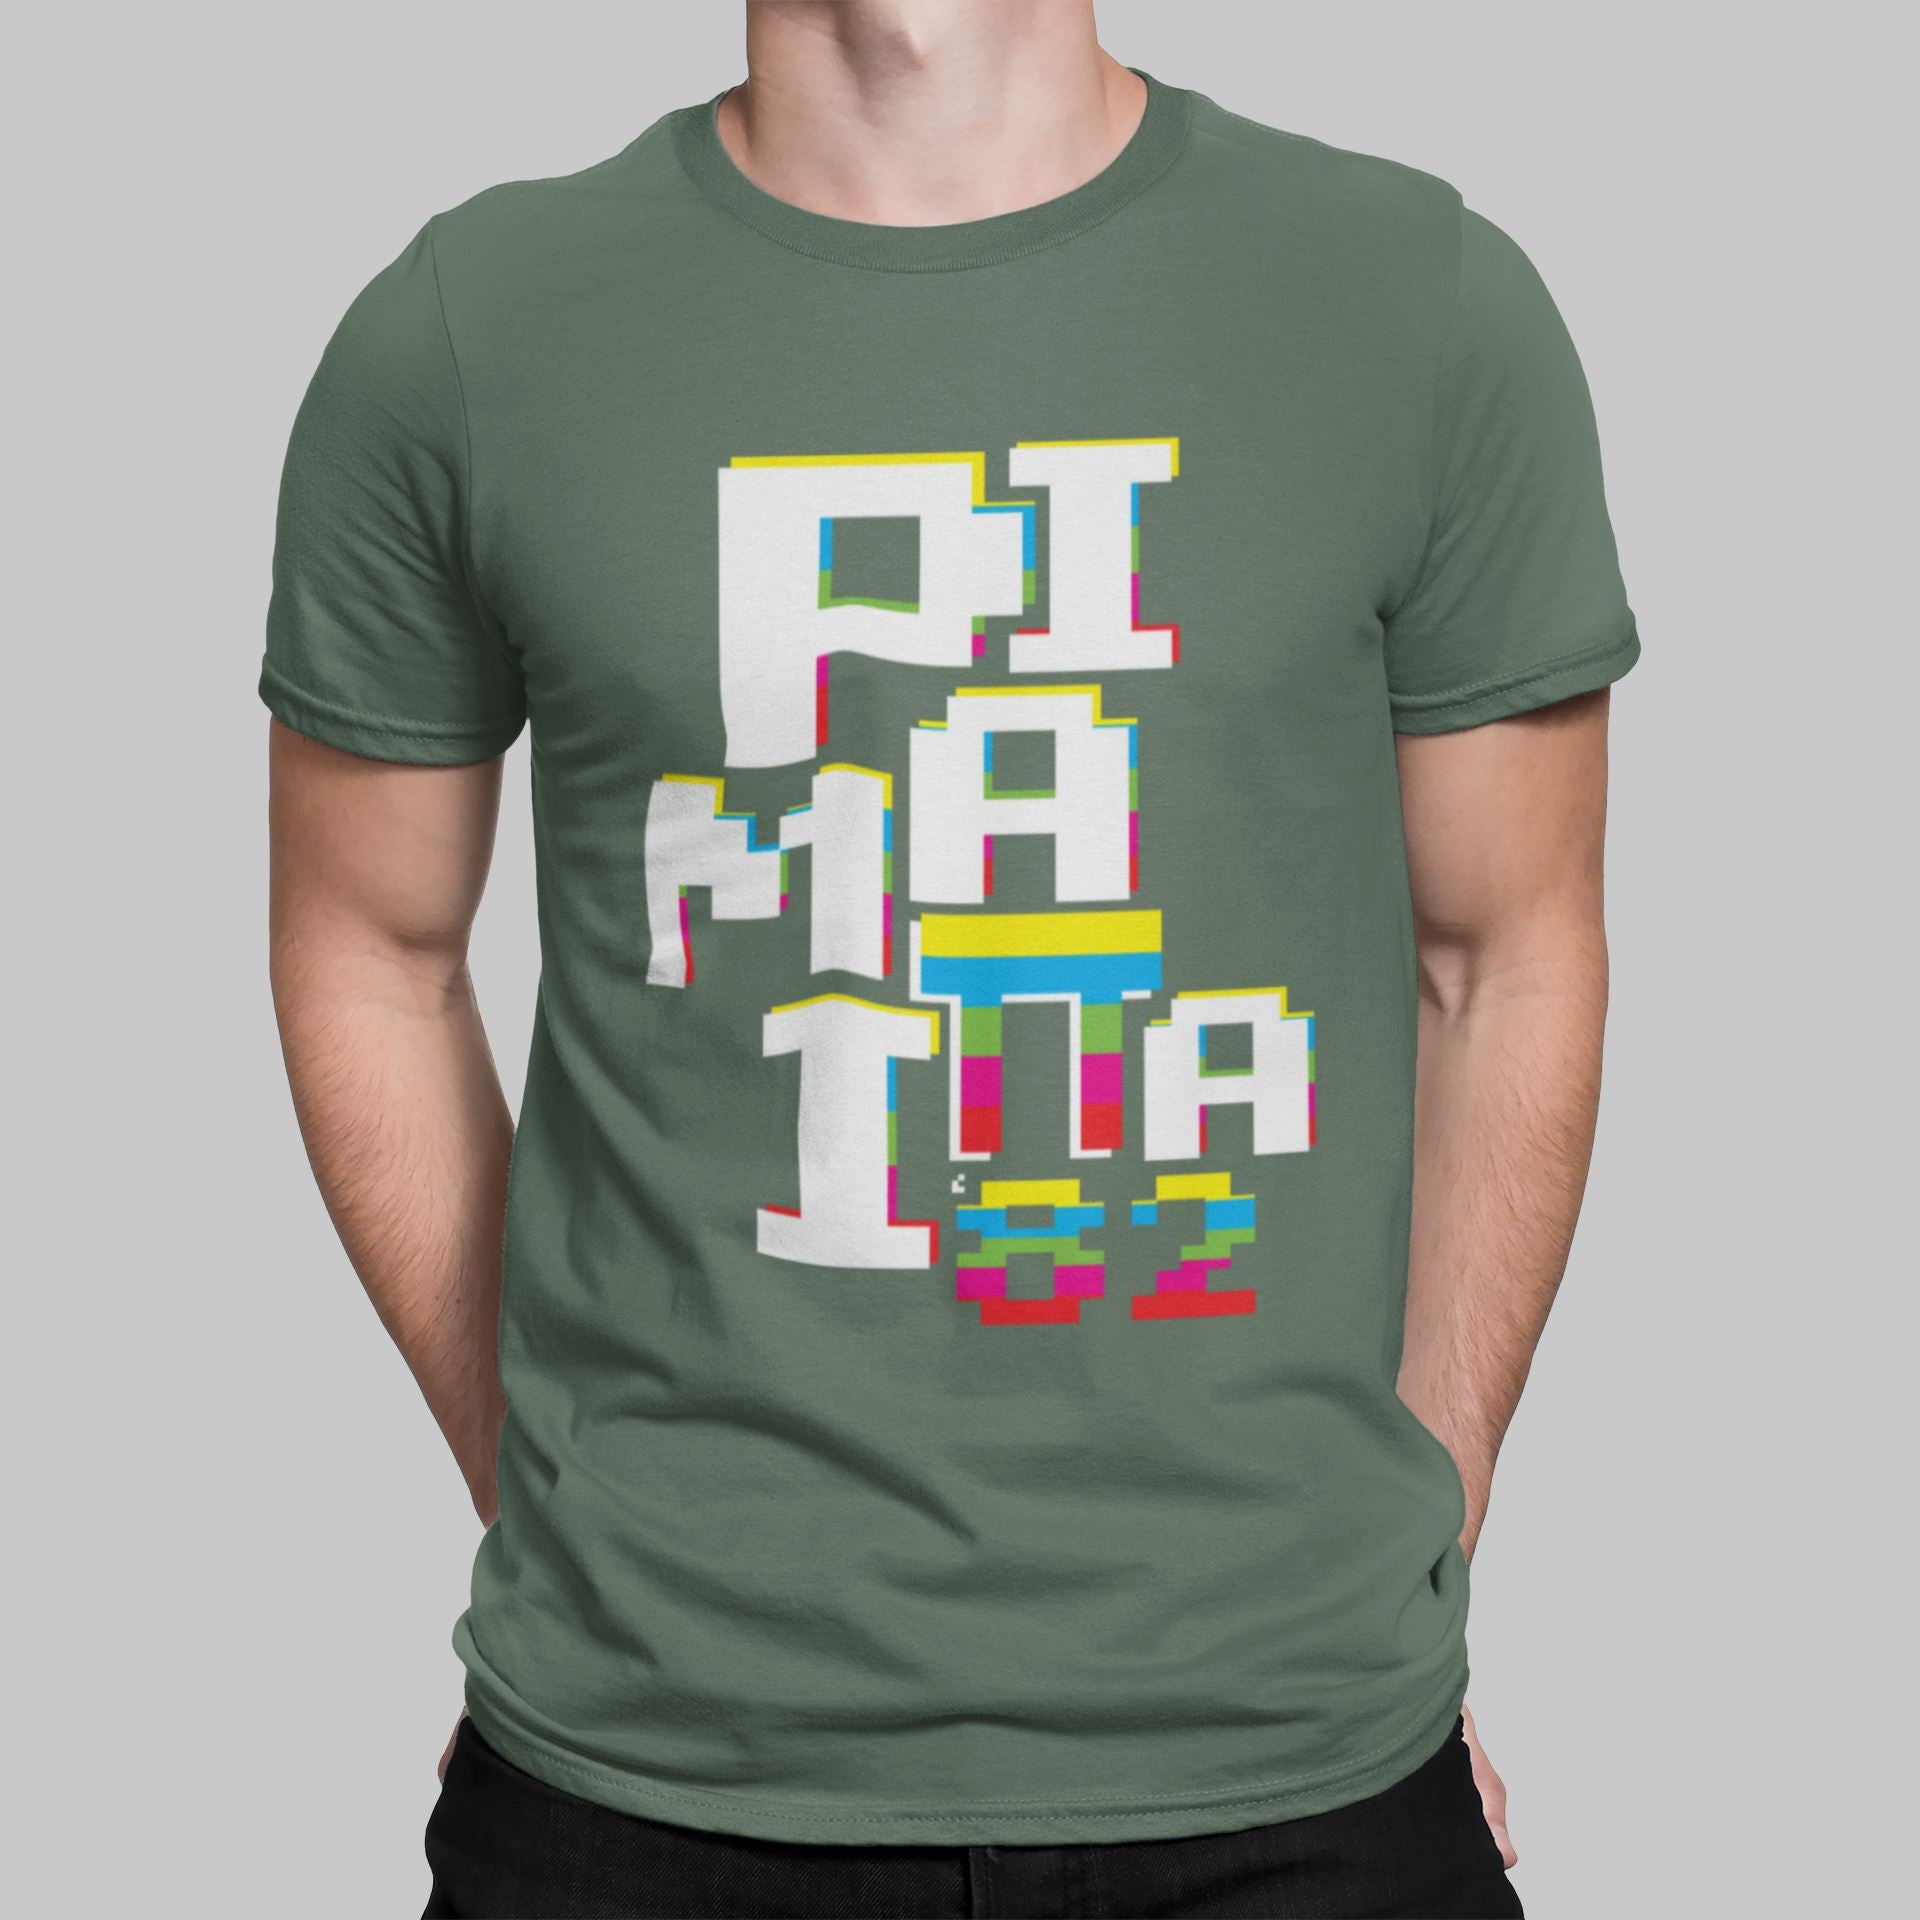 Pimania Retro Gaming T-Shirt T-Shirt Seven Squared Small 34-36" Military Green 